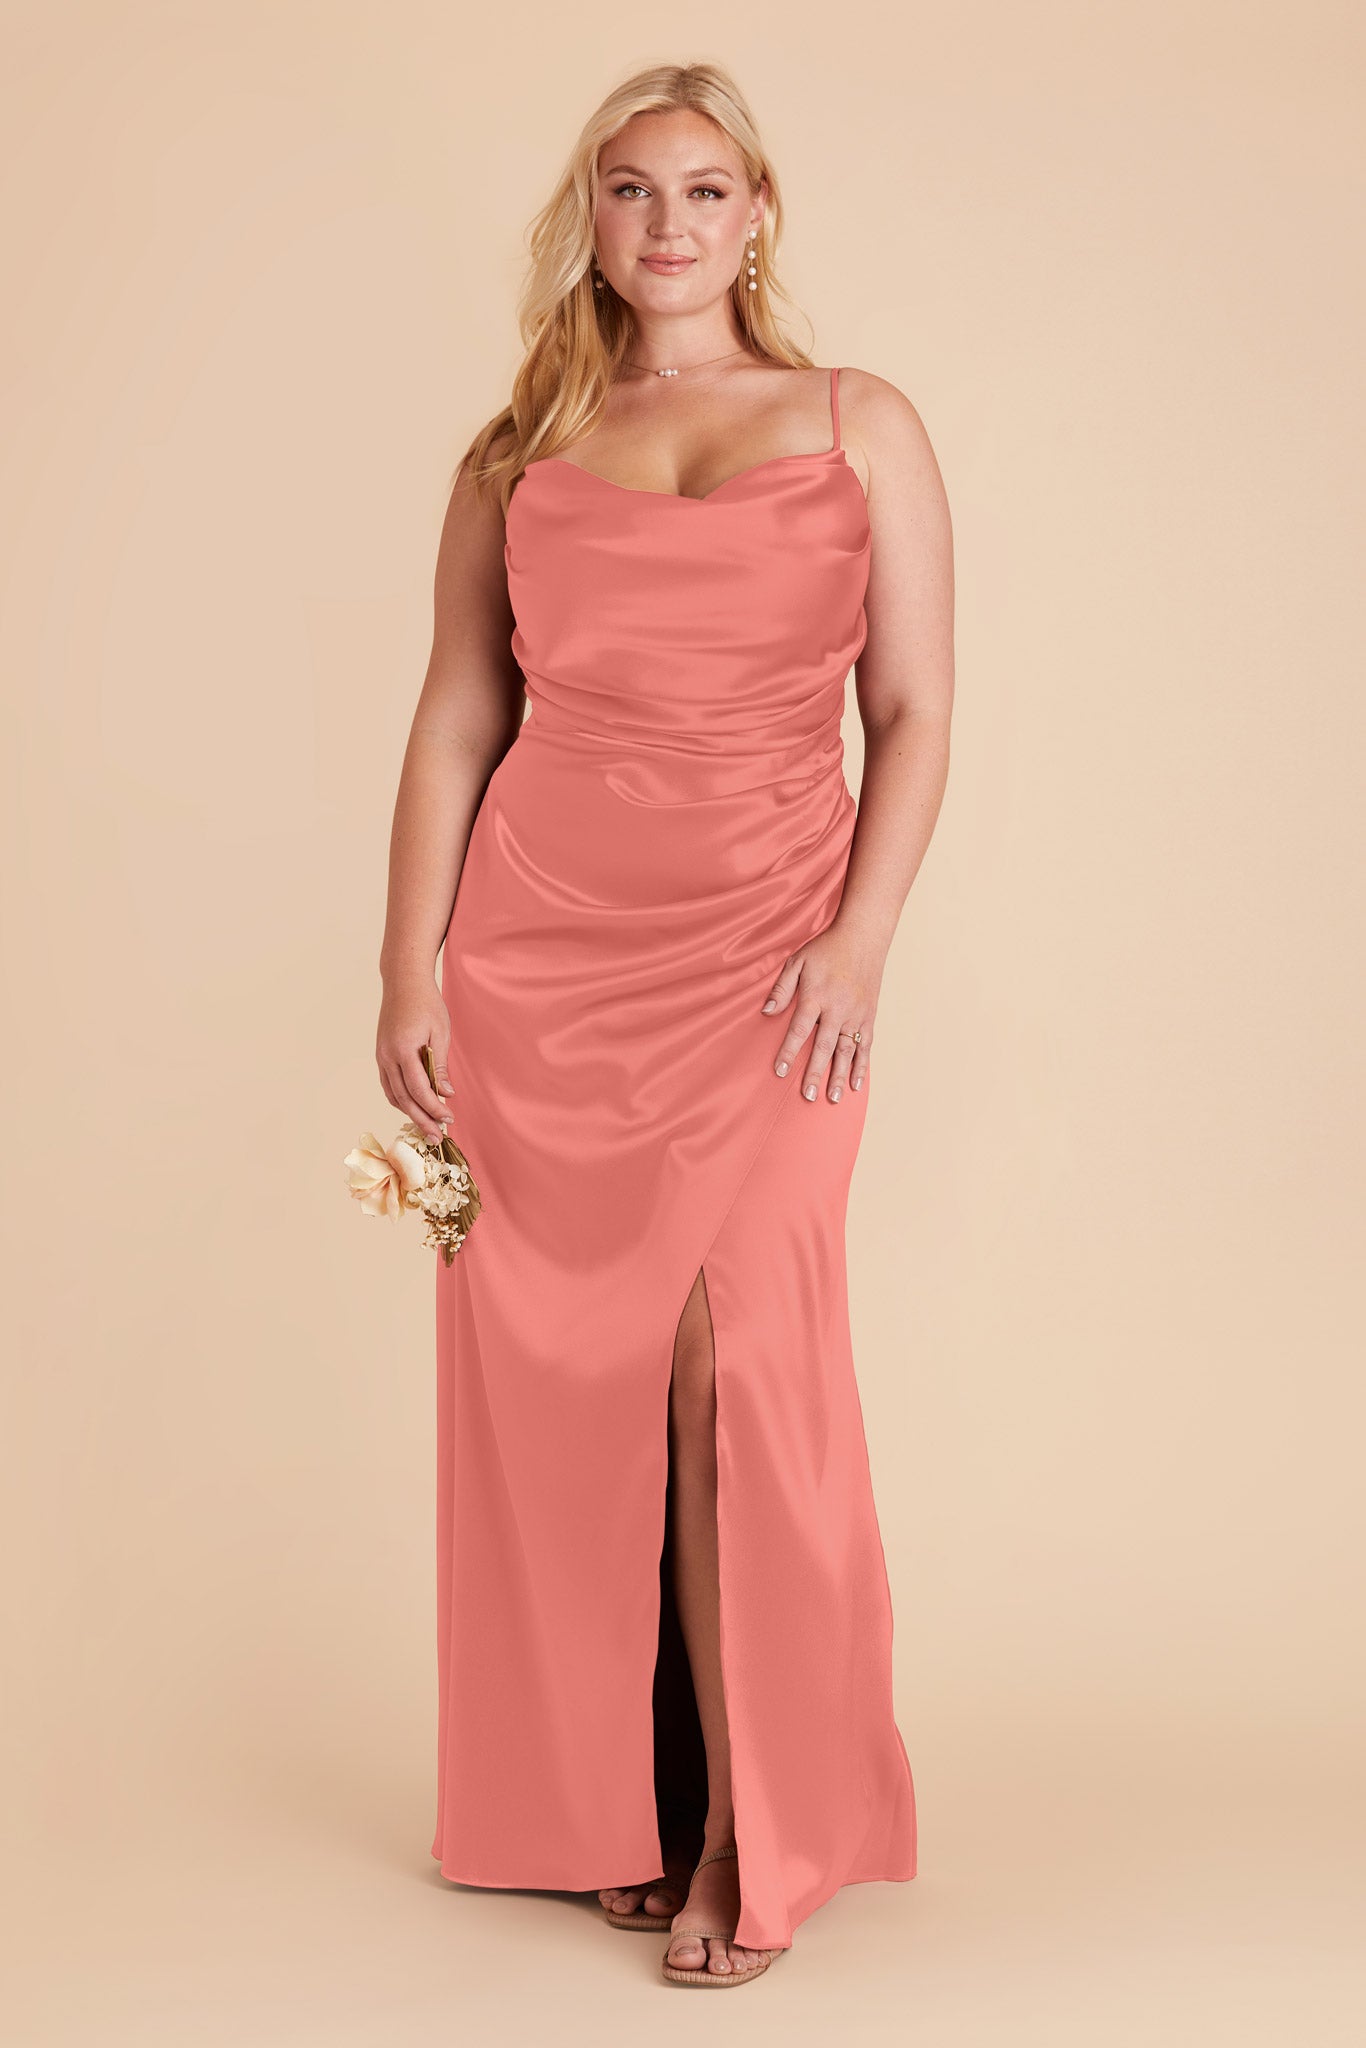 Coral Pink Lydia Matte Satin Dress by Birdy Grey